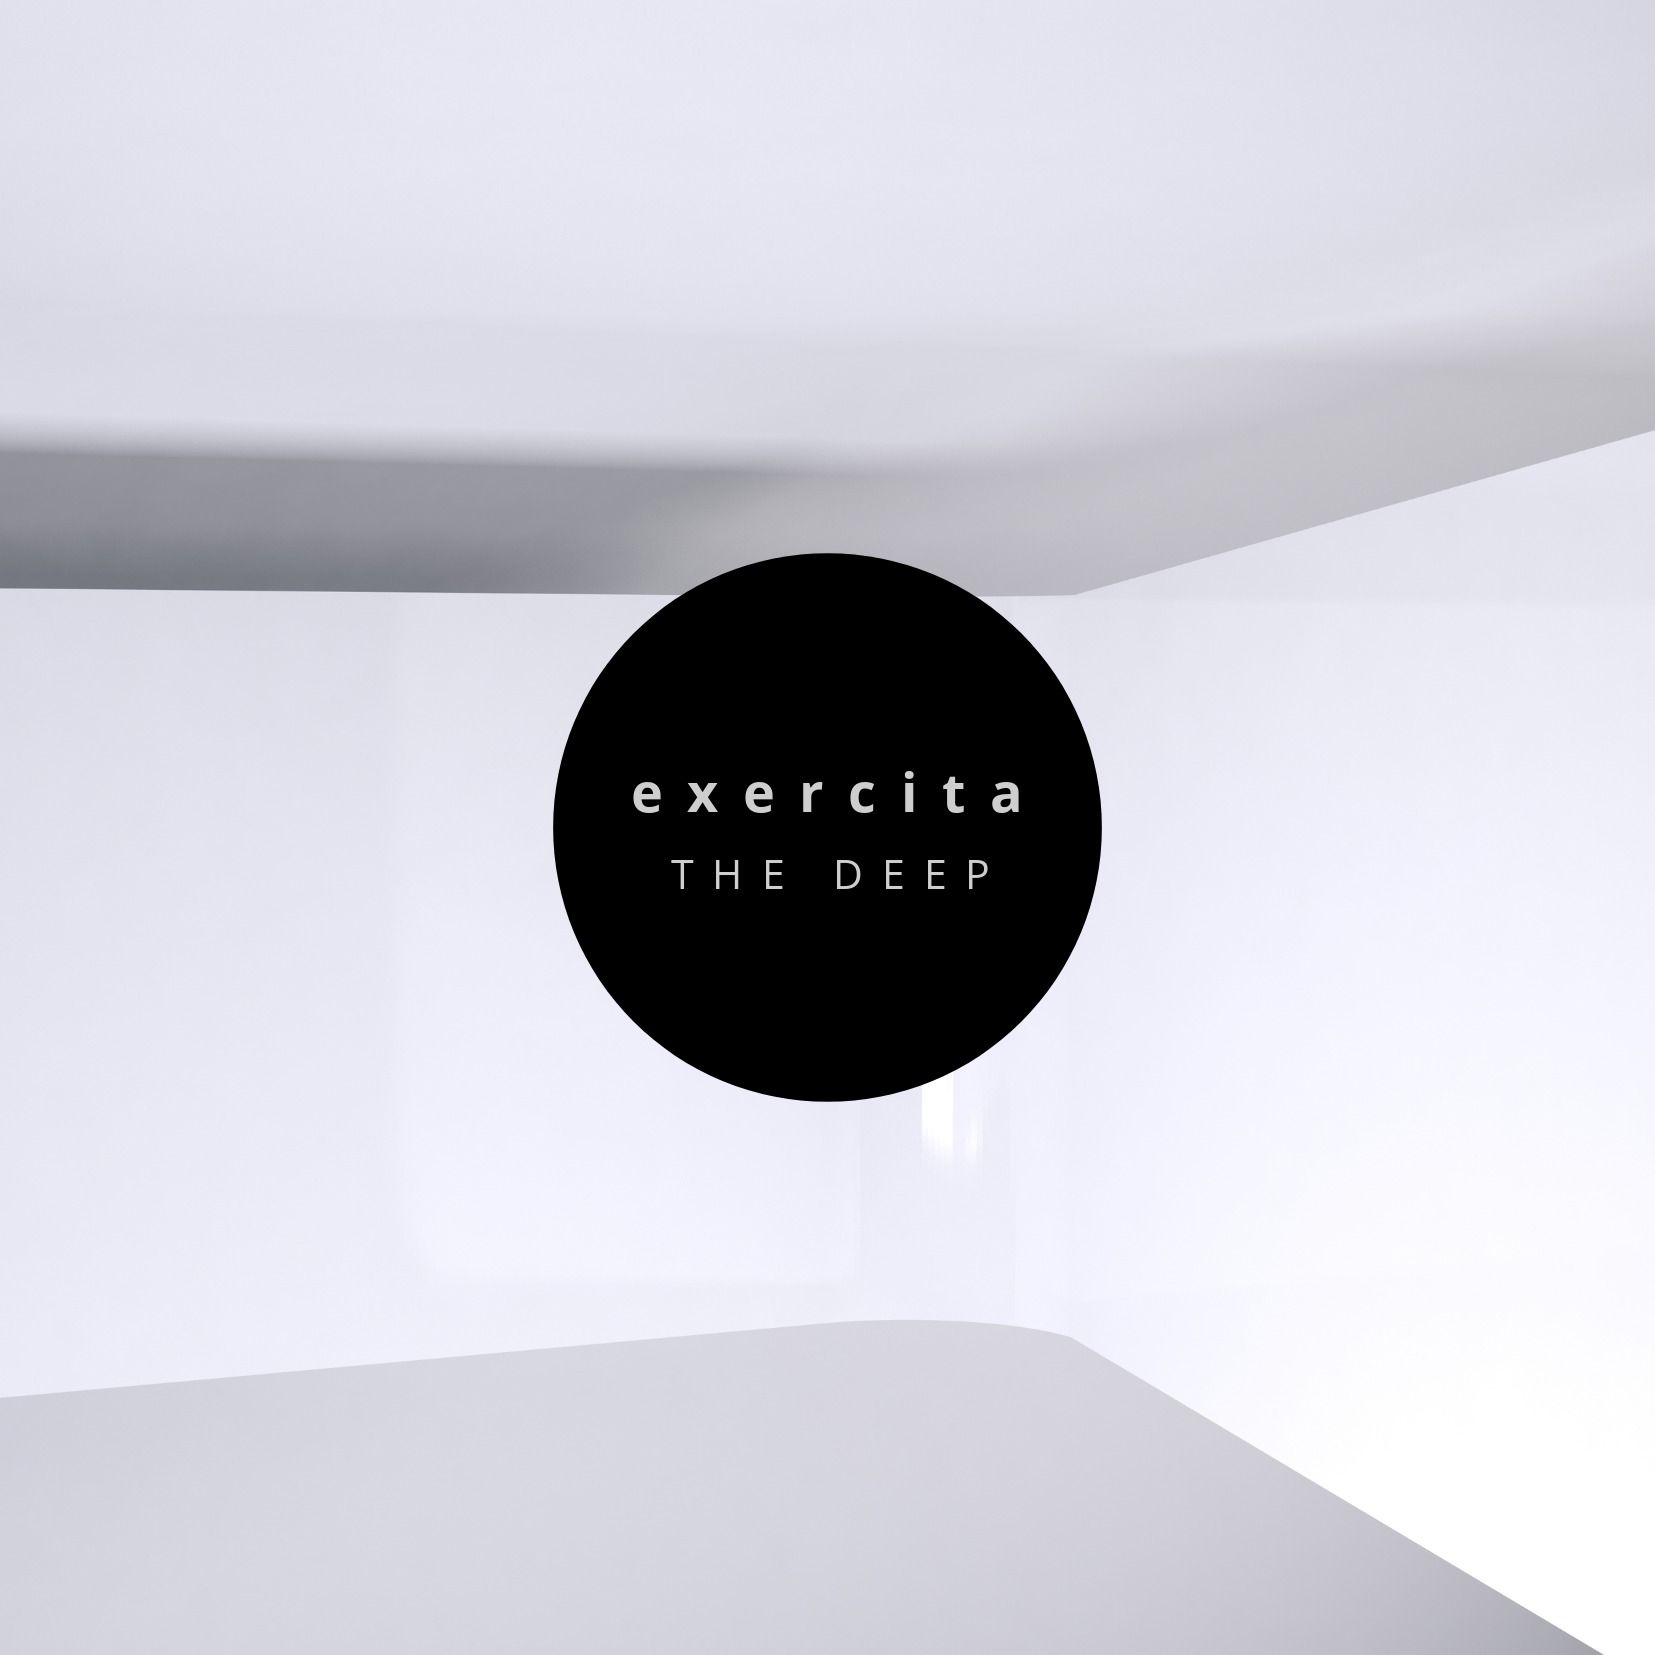 Album design with black circle over white background - Simplicity of Album Cover Design - Image